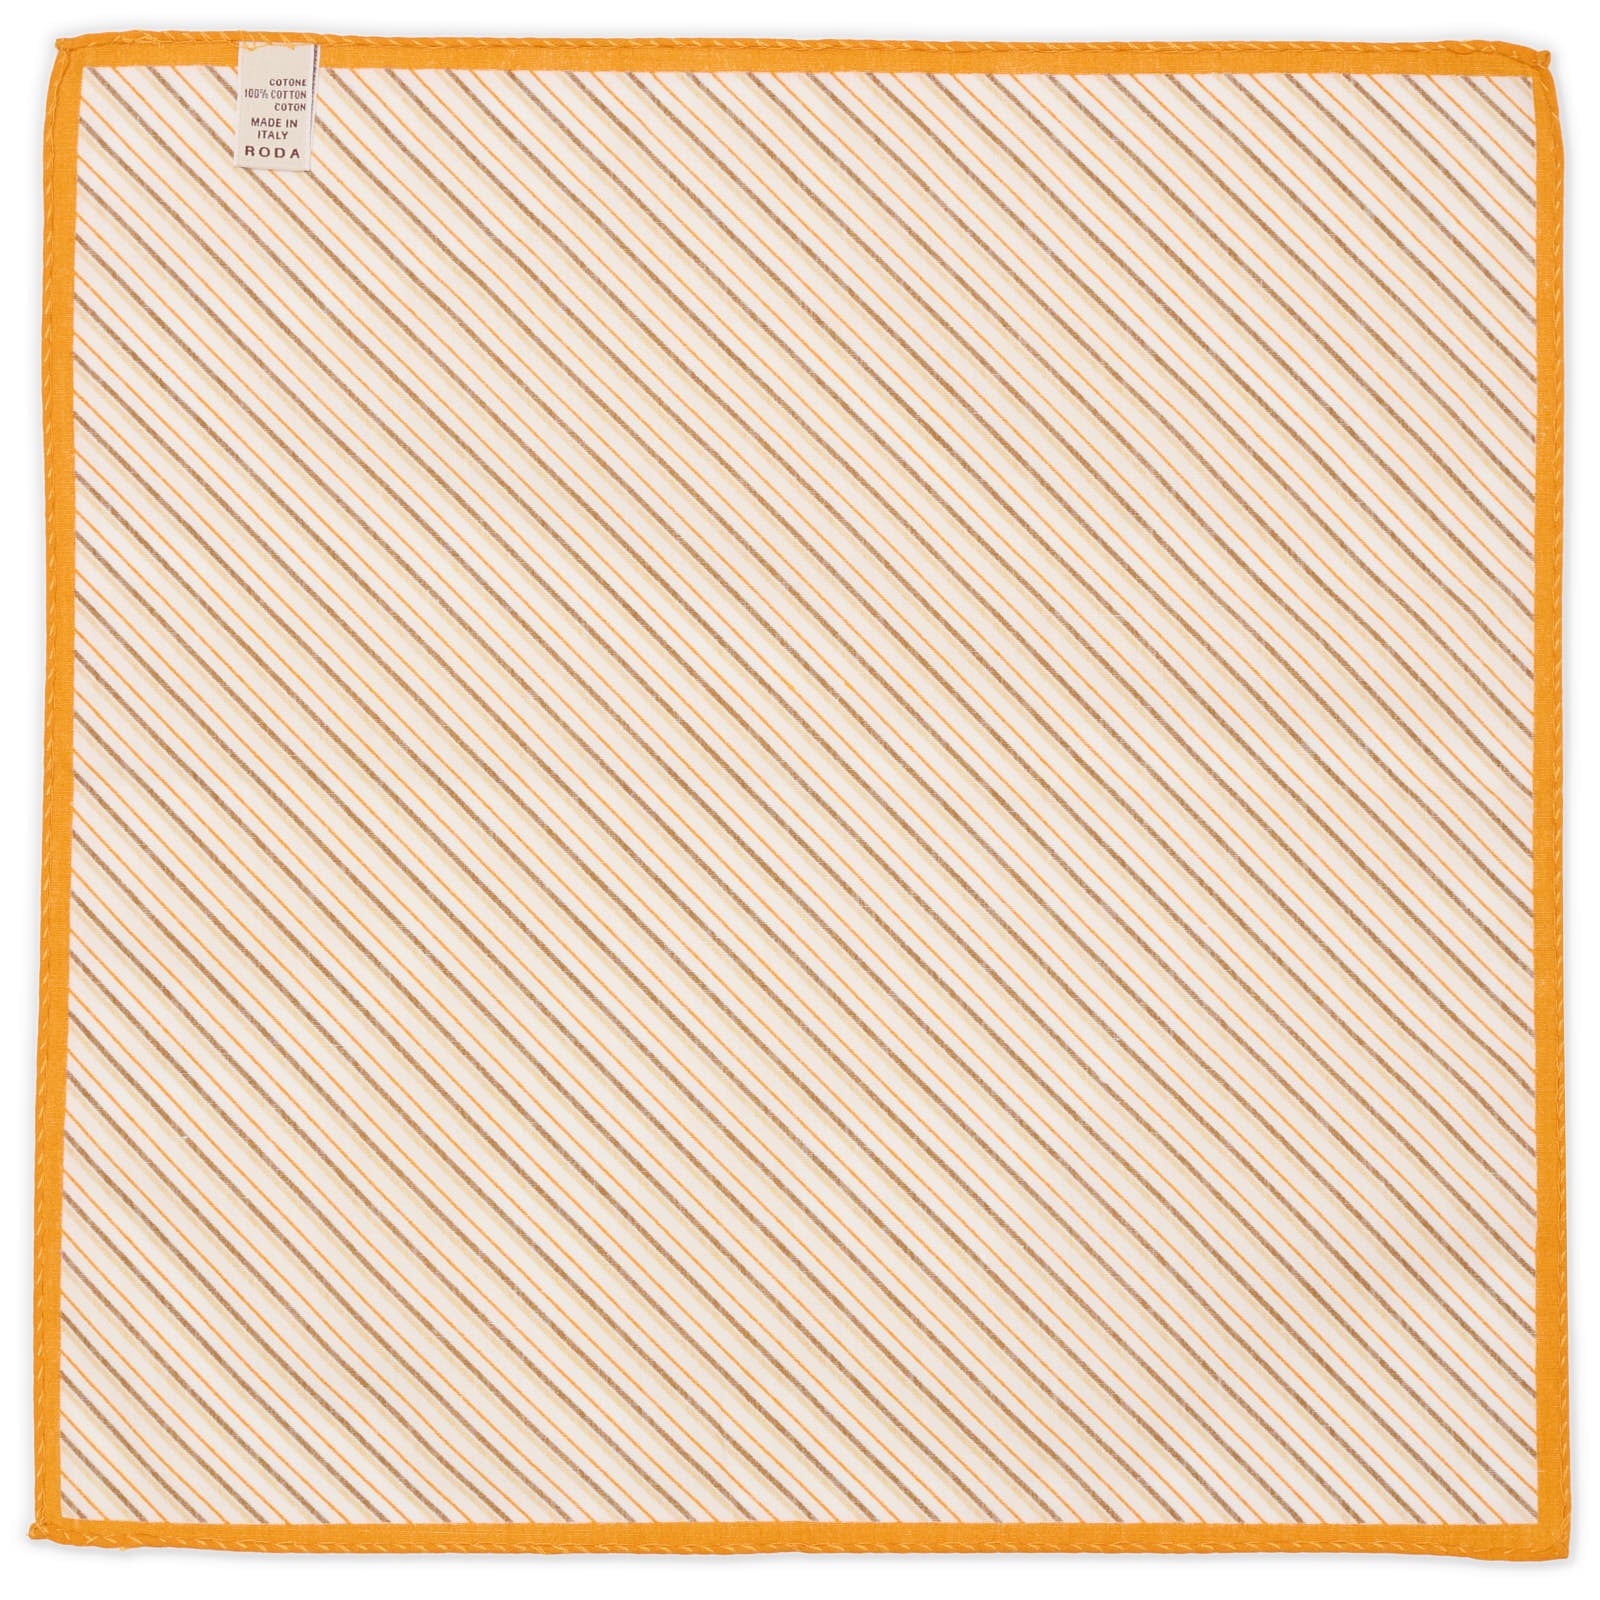 RODA Handmade Orange-White Striped Cotton Pocket Square NEW 32cm x 32cm